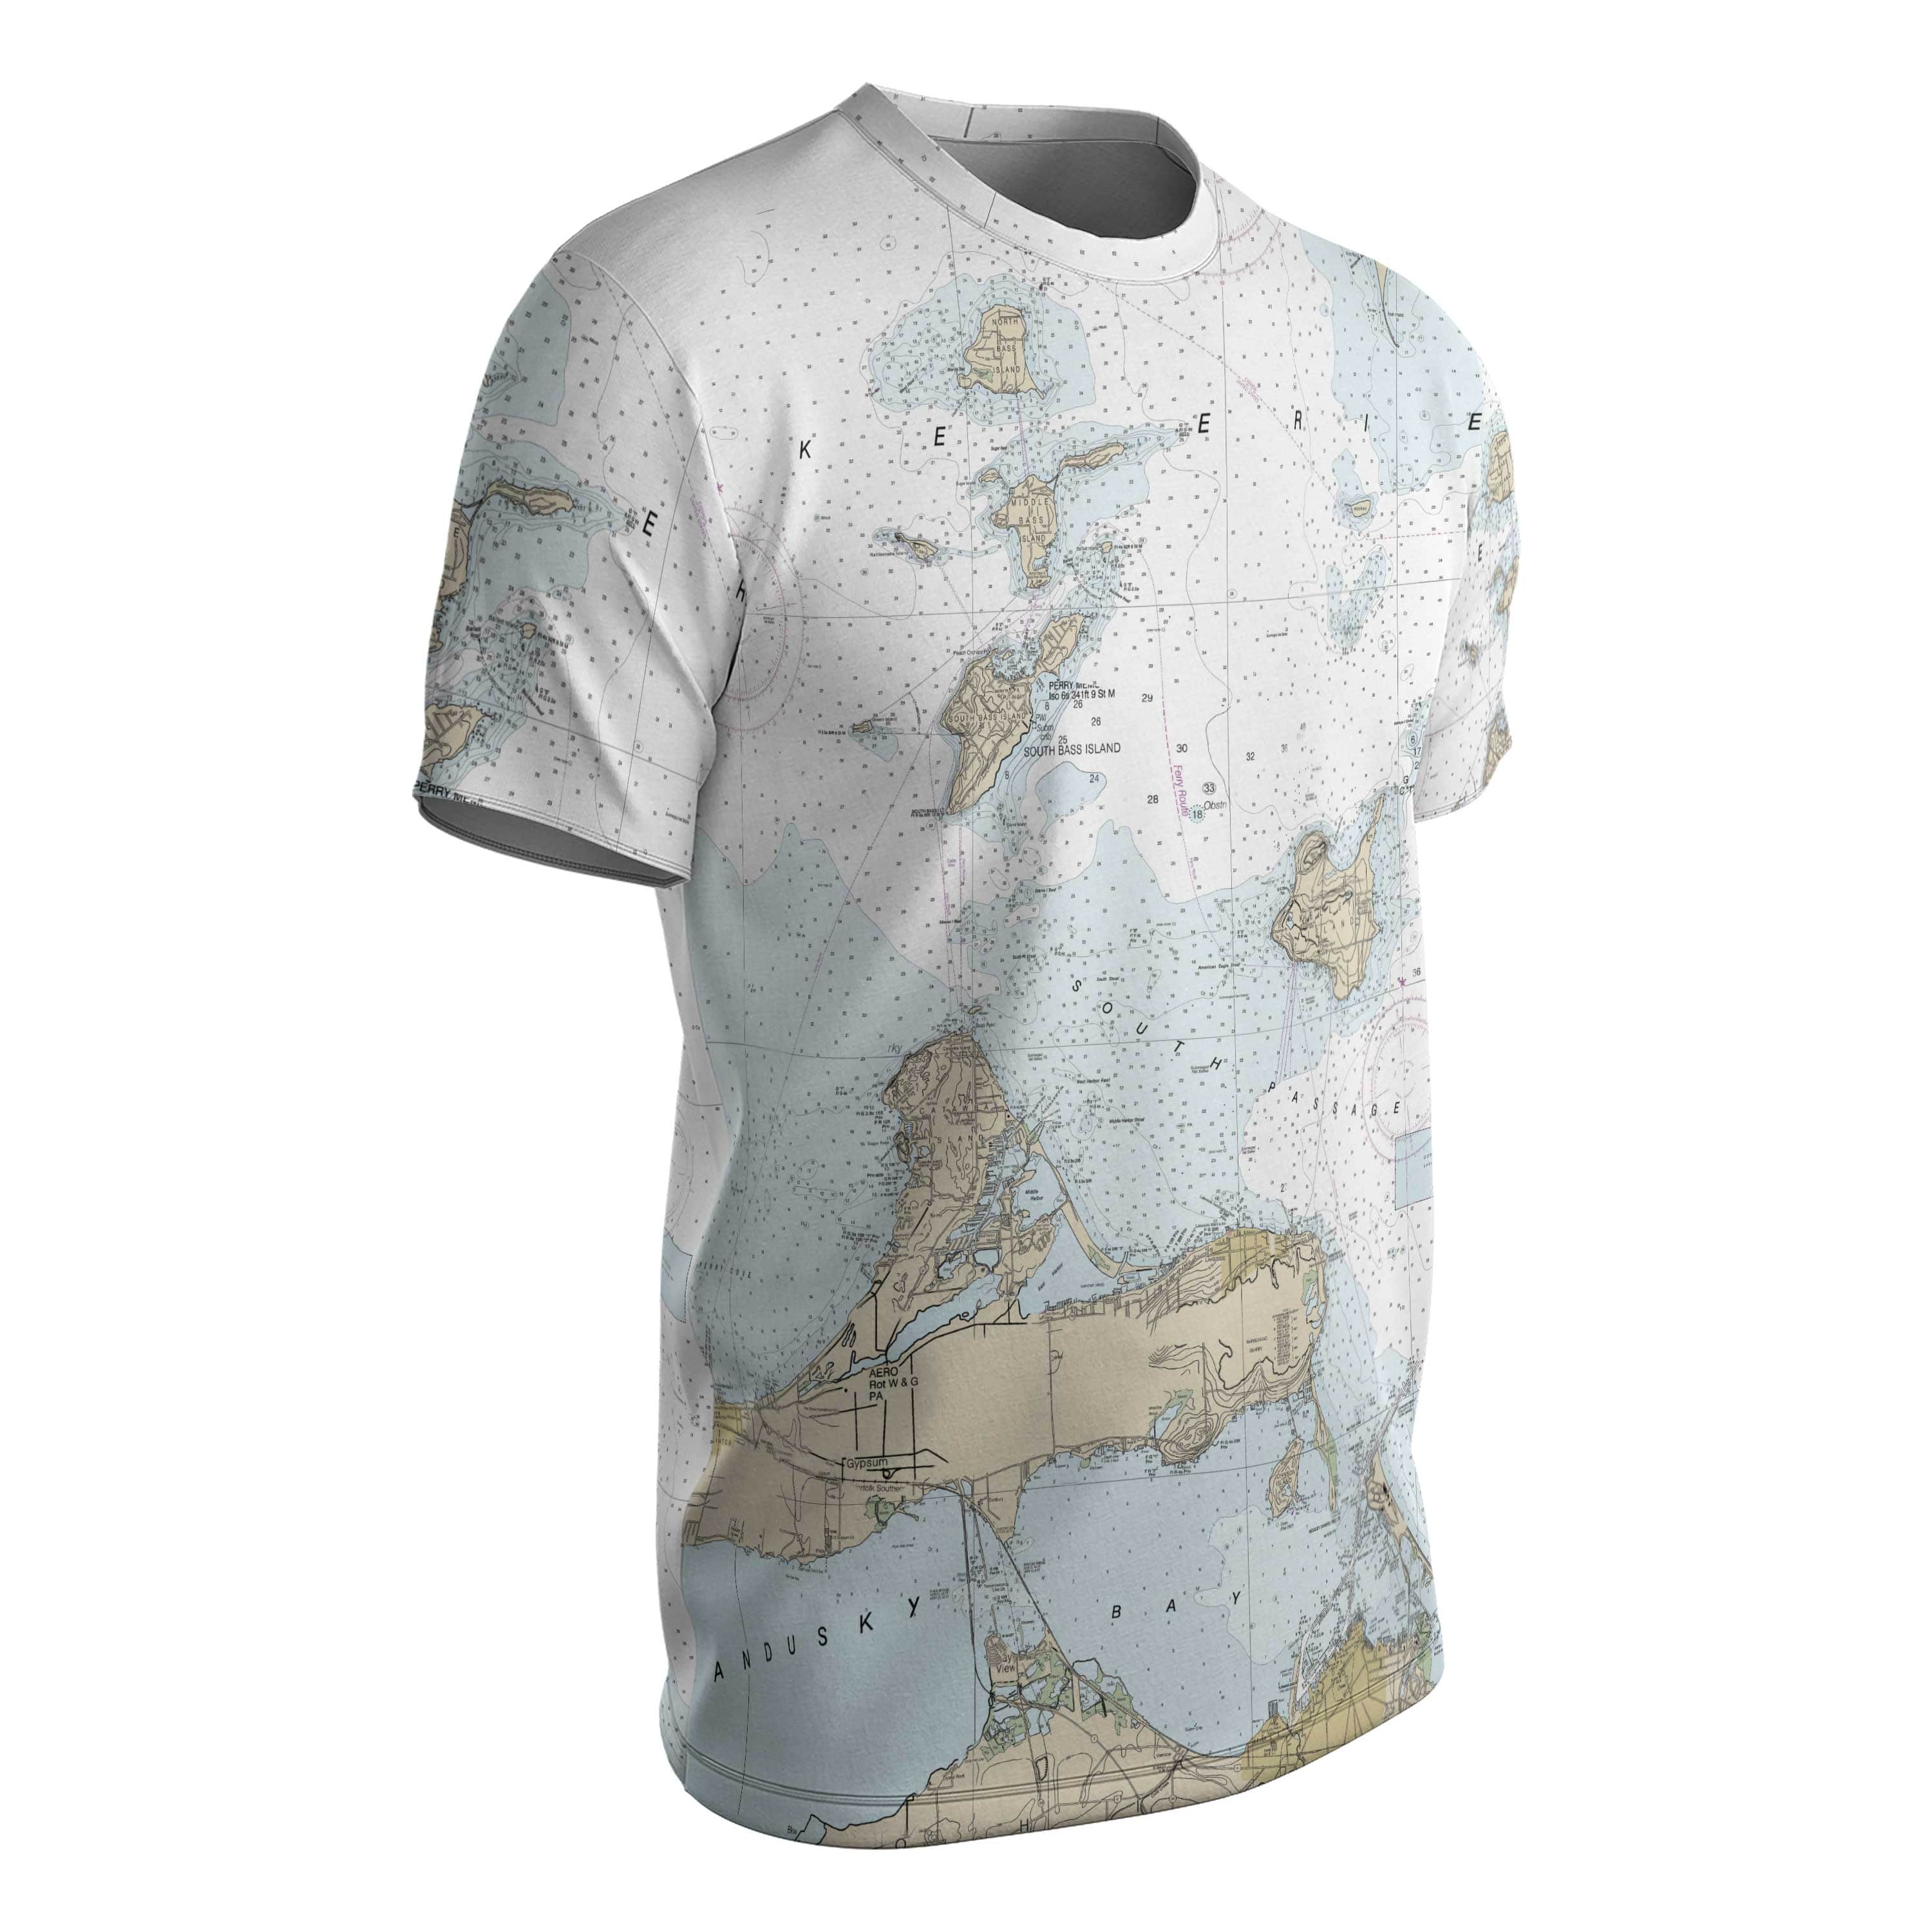 The Sandusky and Lake Erie Islands Crewneck Tee Shirt